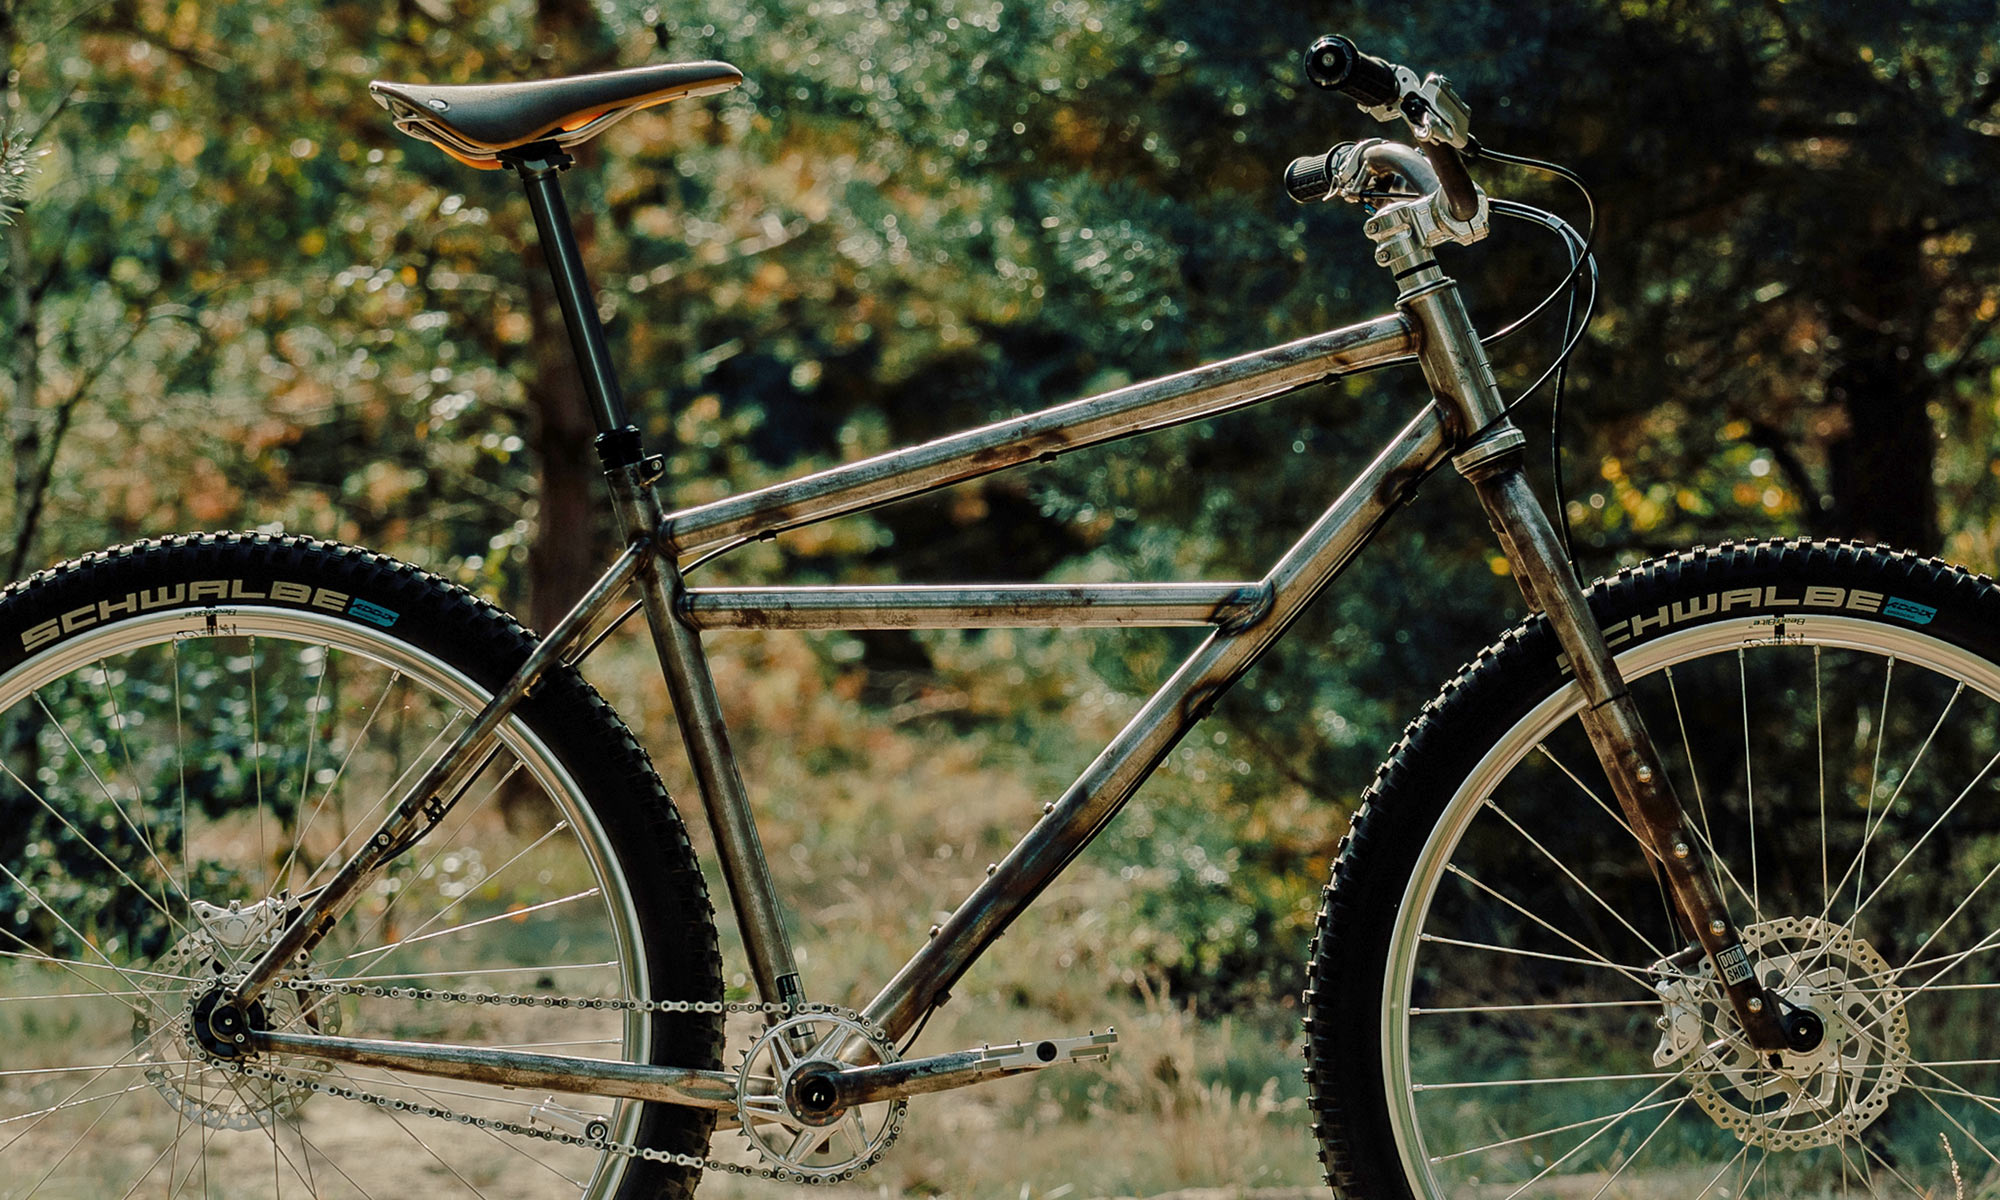 Sour Bad Granny Raw Ltd. steel-everything limited edition retro modern mountain bike klunker, made-in-Germany frameset